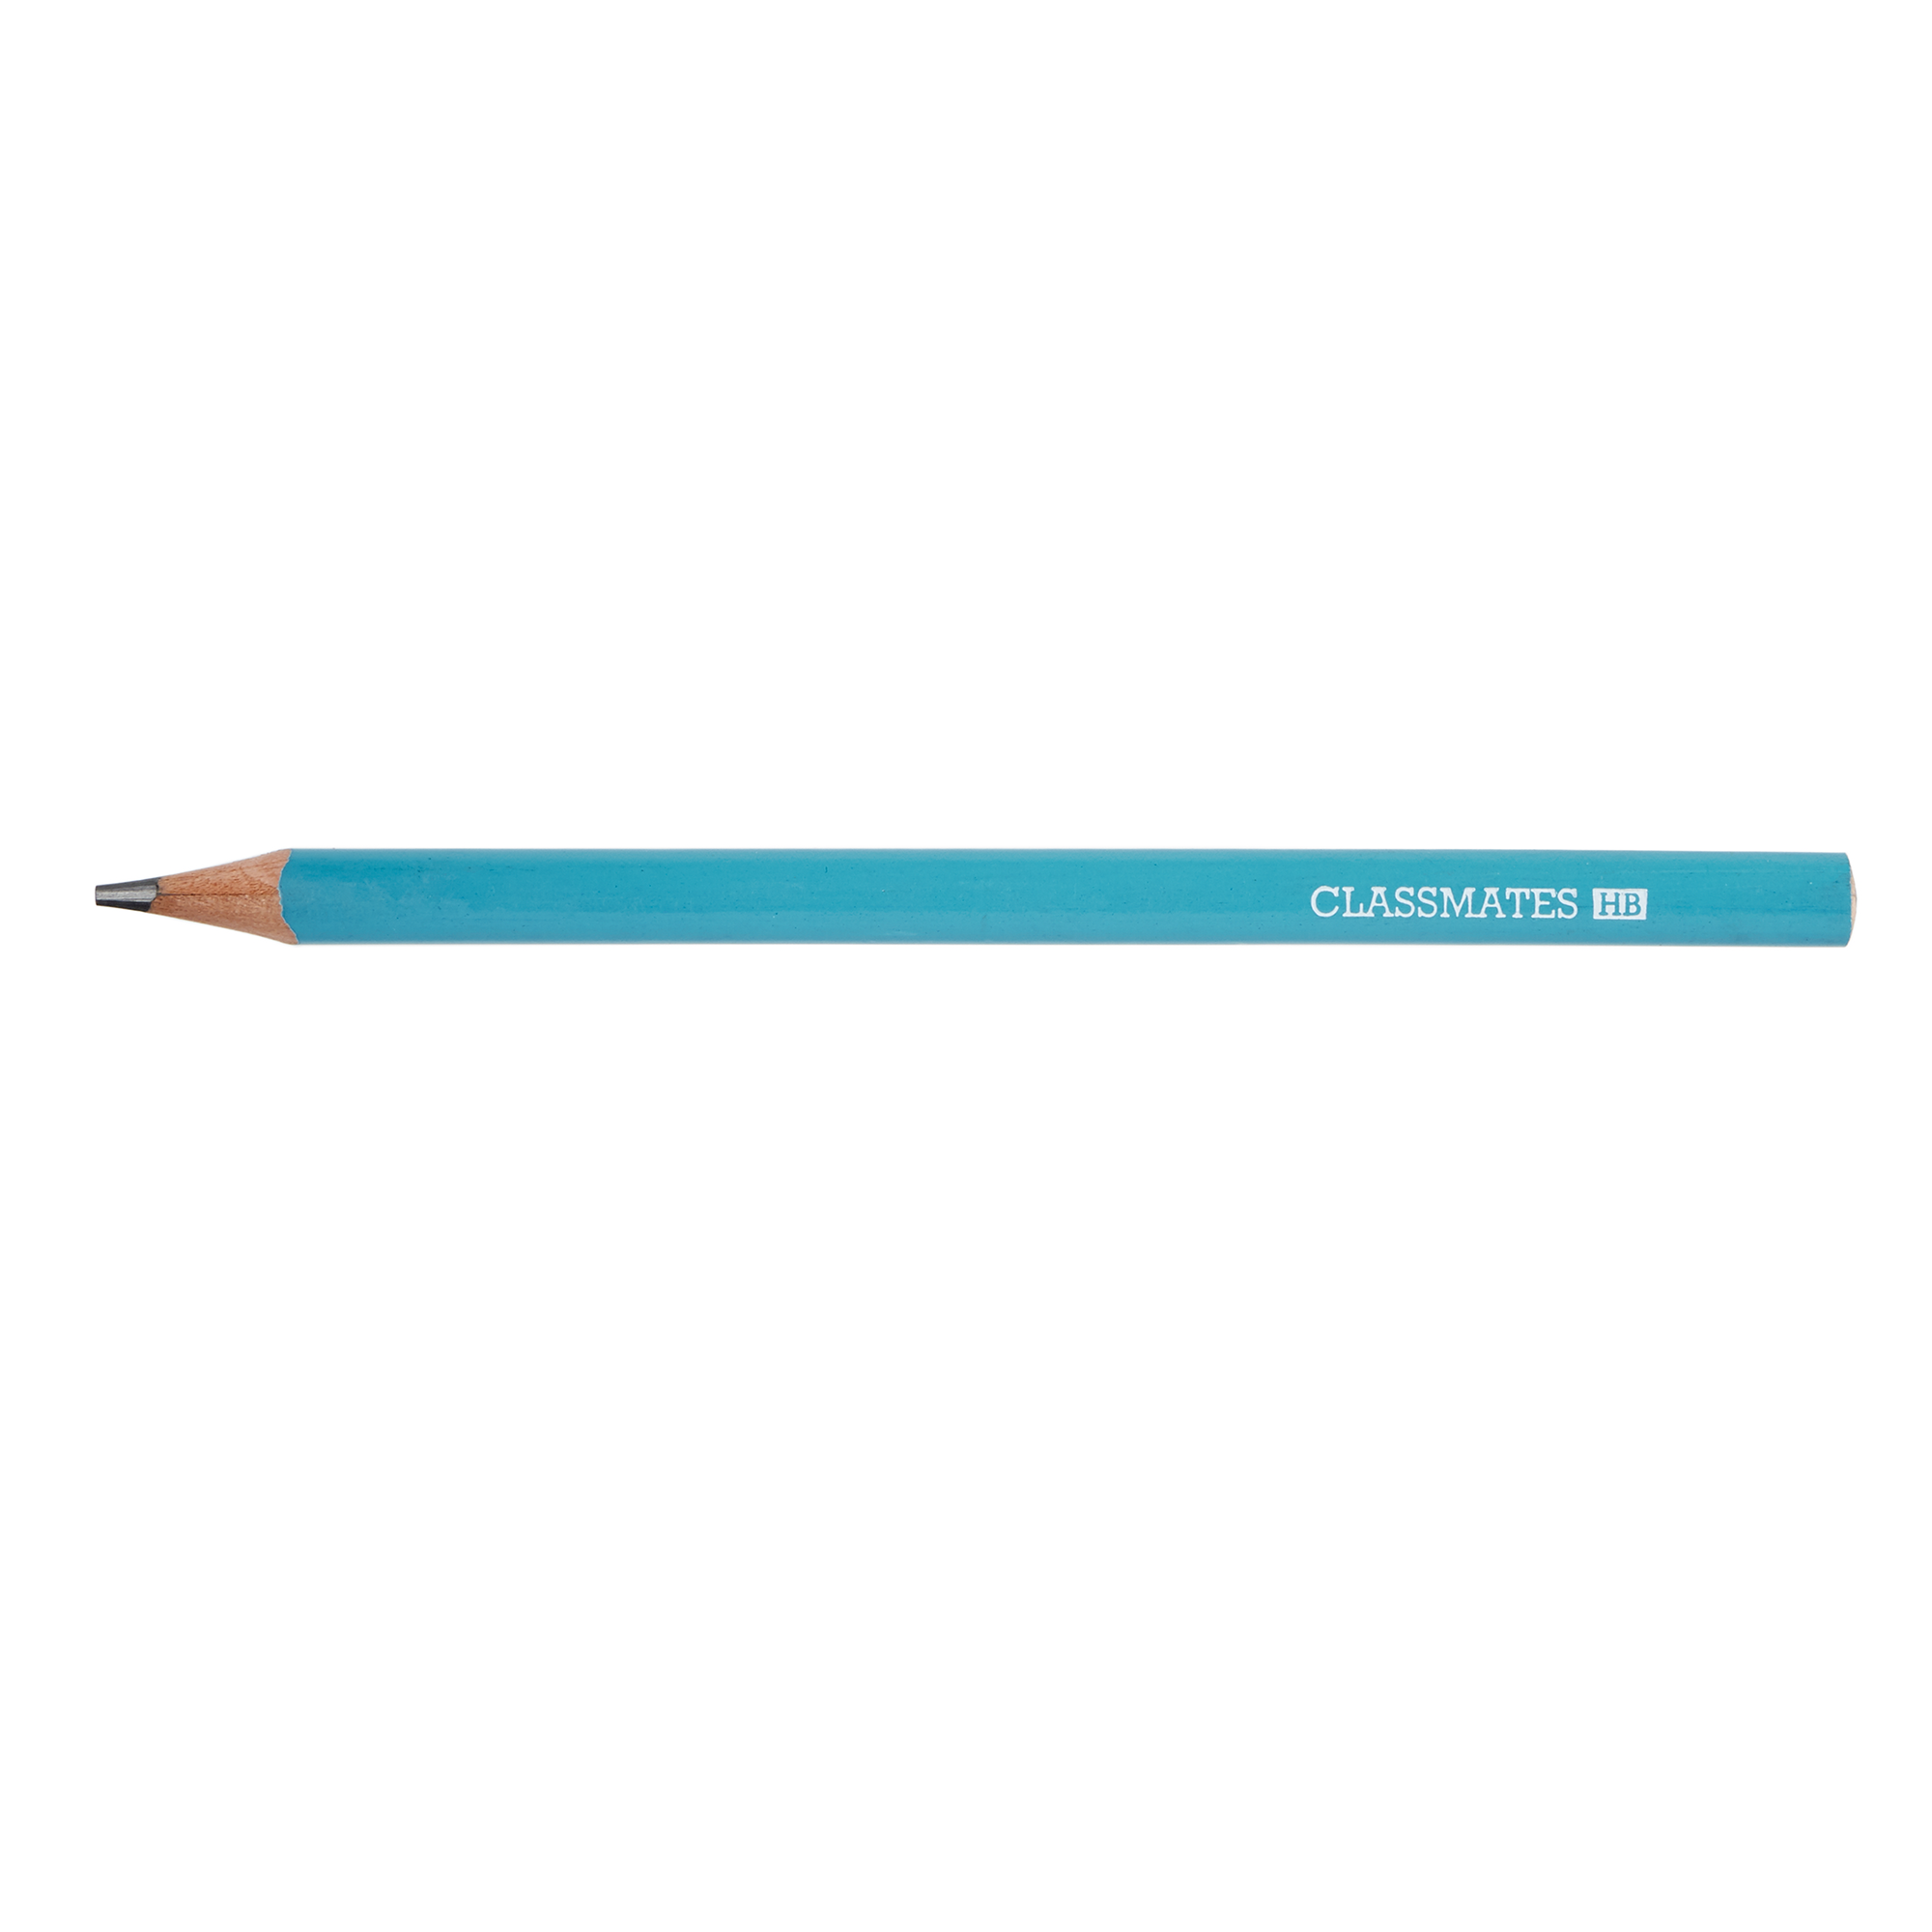 pencil description